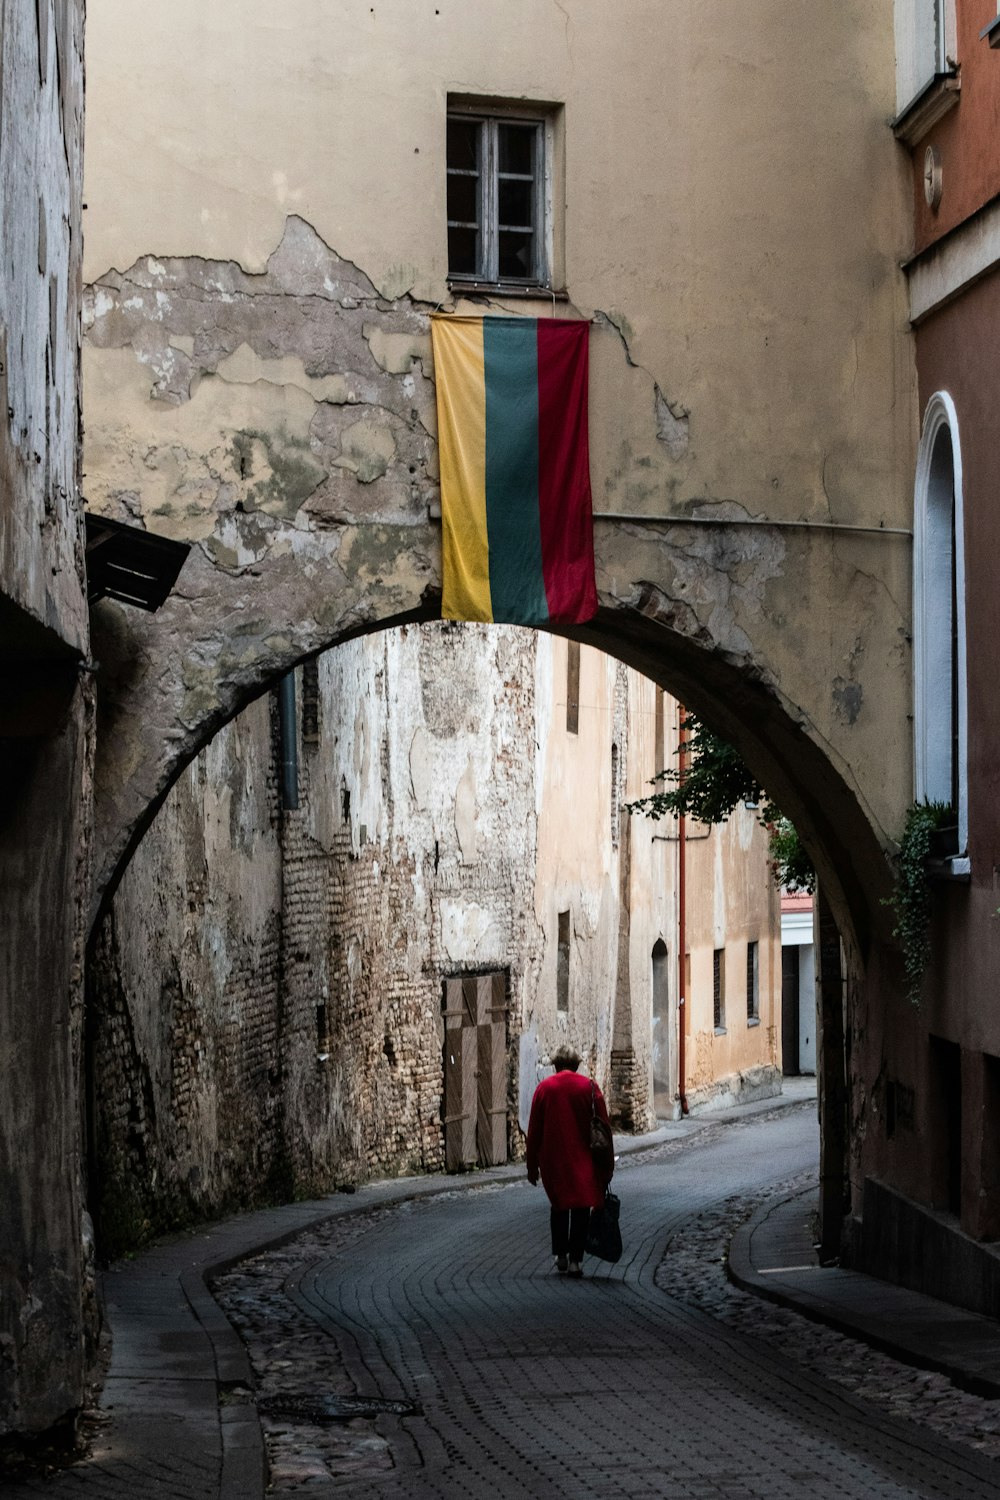 a person walking down a street under an arch